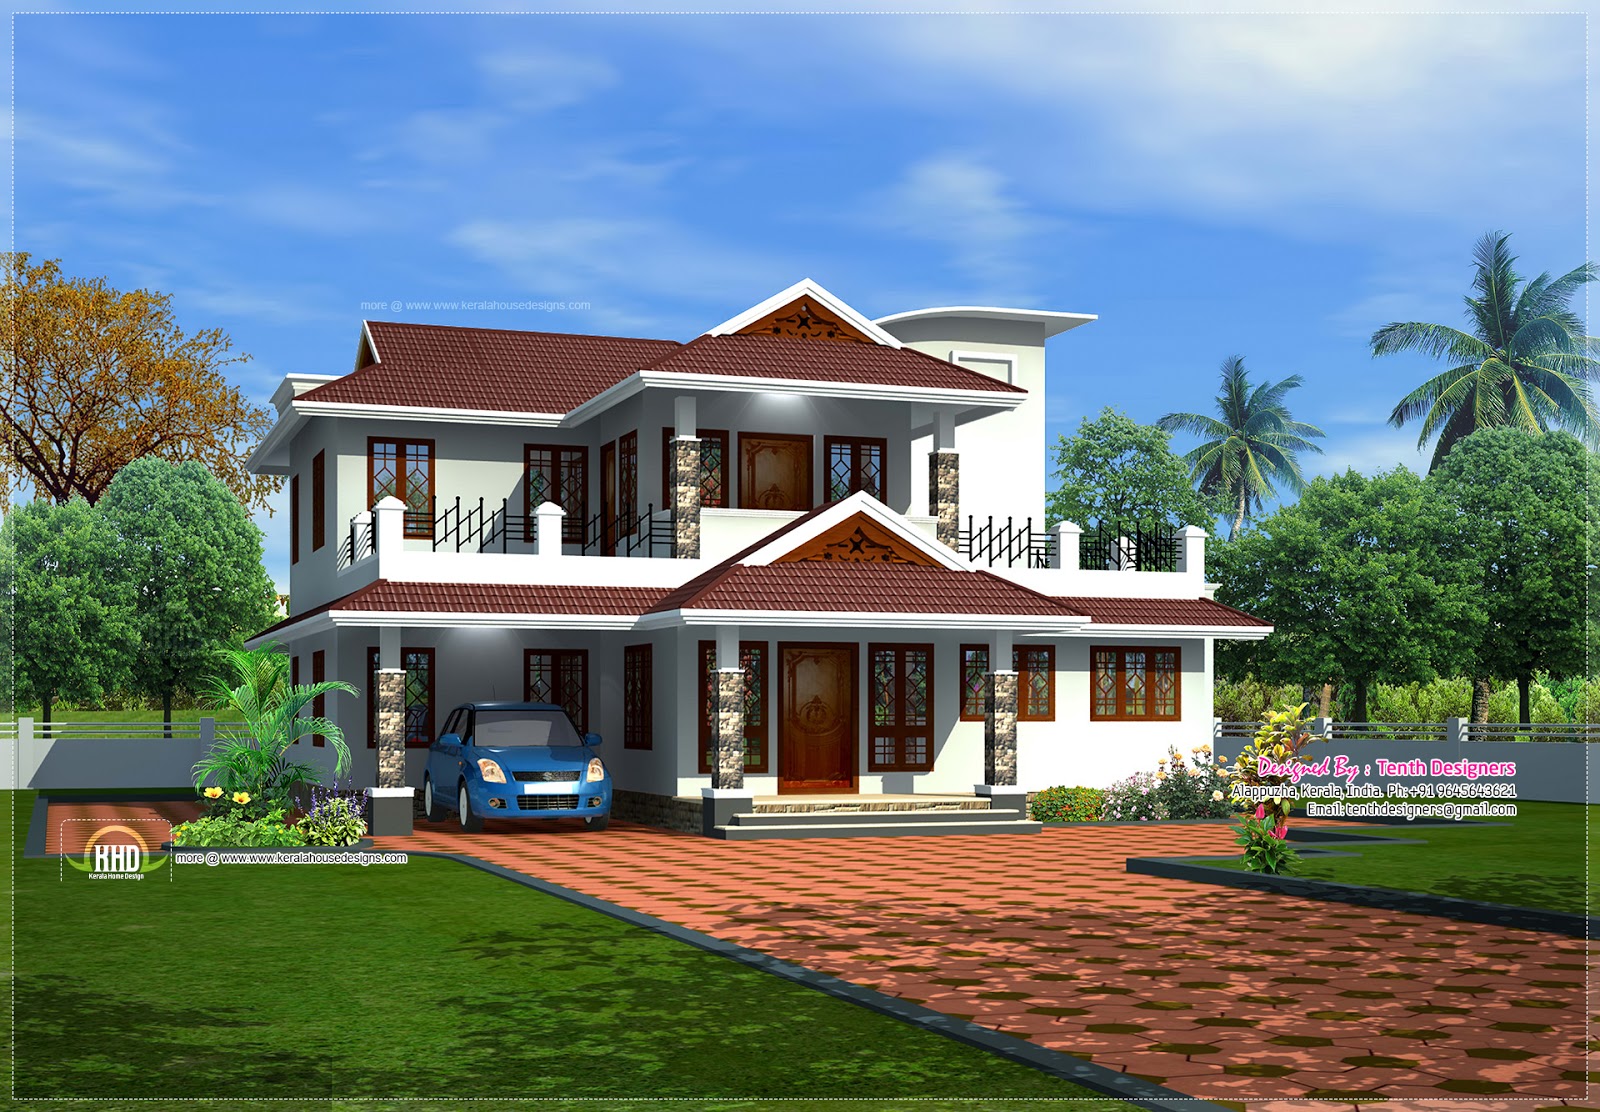  2000  square  feet  Kerala model home  Home  Kerala Plans 